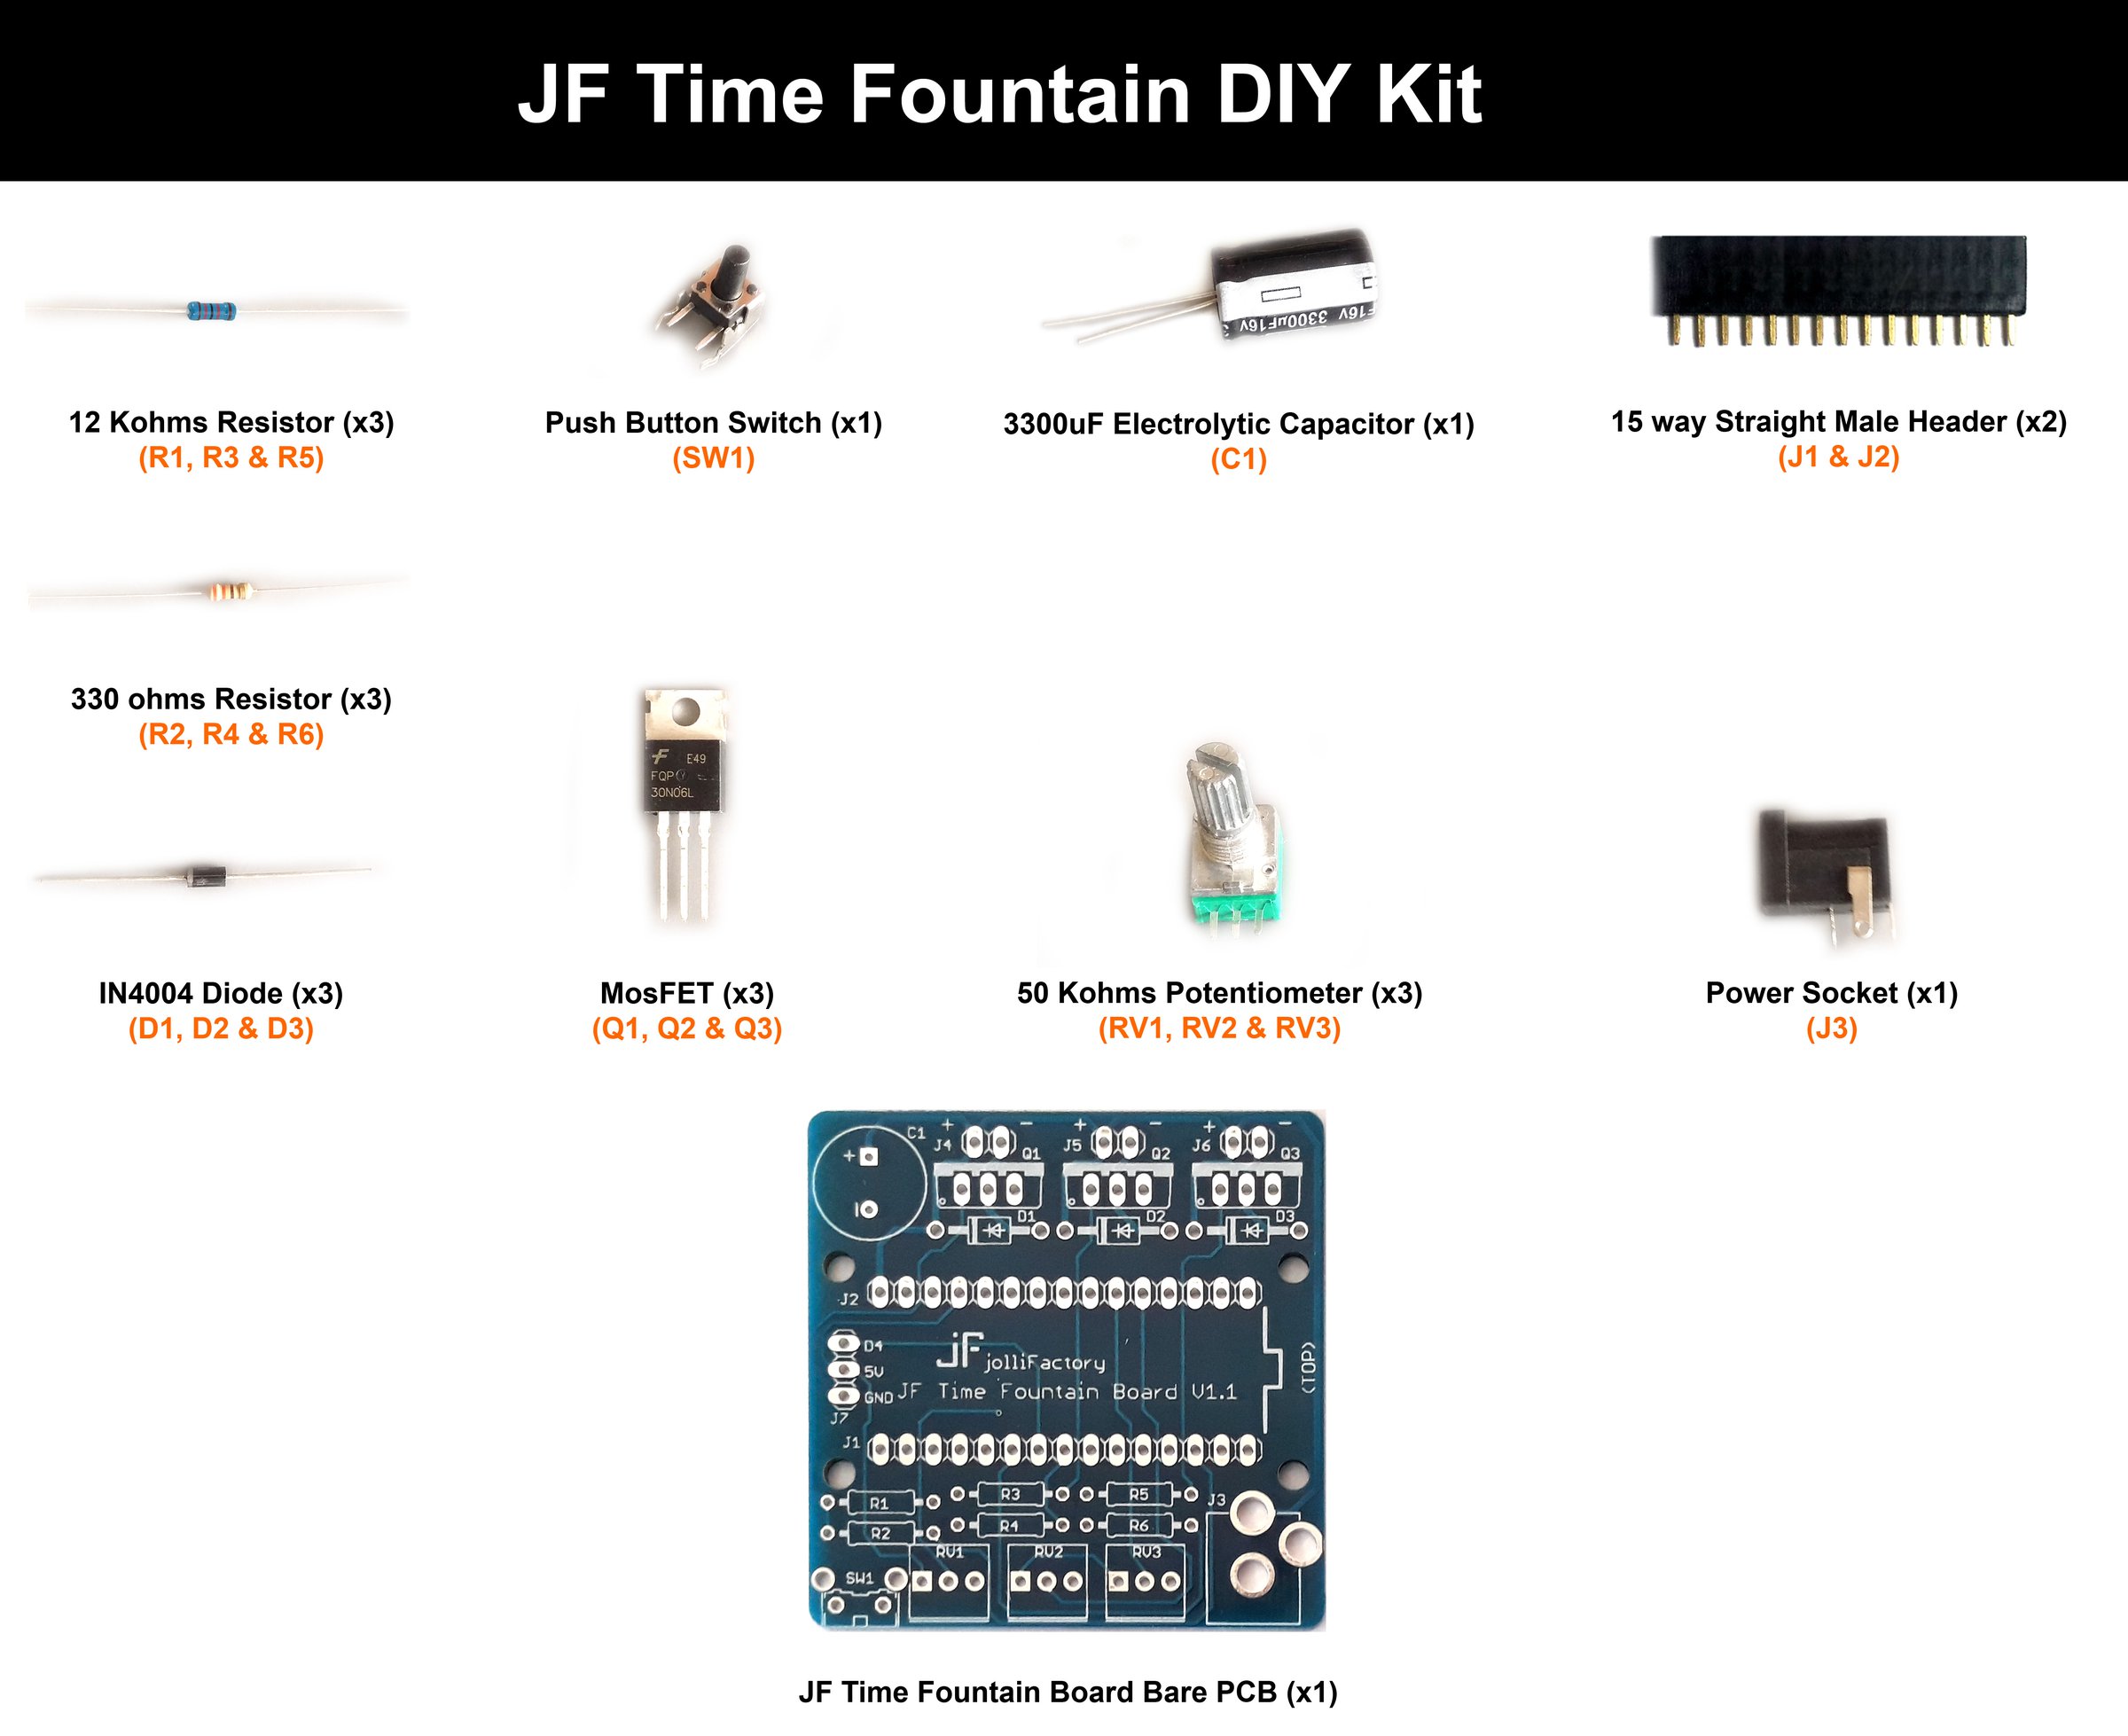 JF Time Fountain DIY Kit